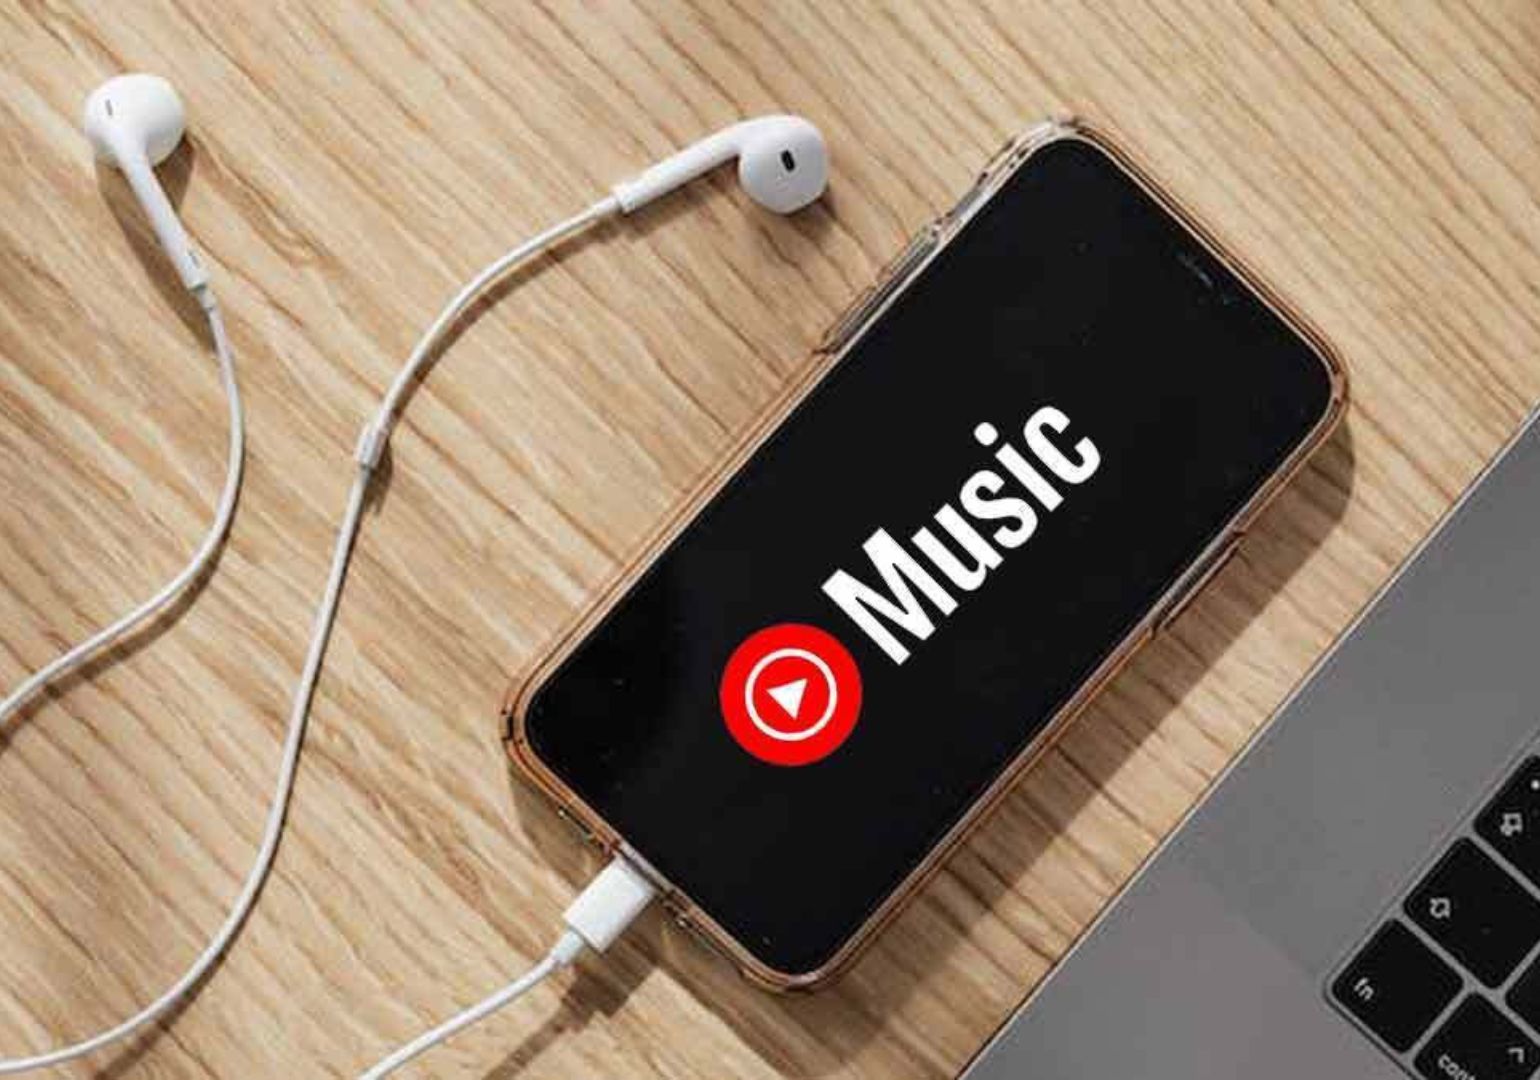 Youtube Music-ისა და Premium-ის გამომწერთა რაოდენობამ 100 მილიონს გადააჭარბა